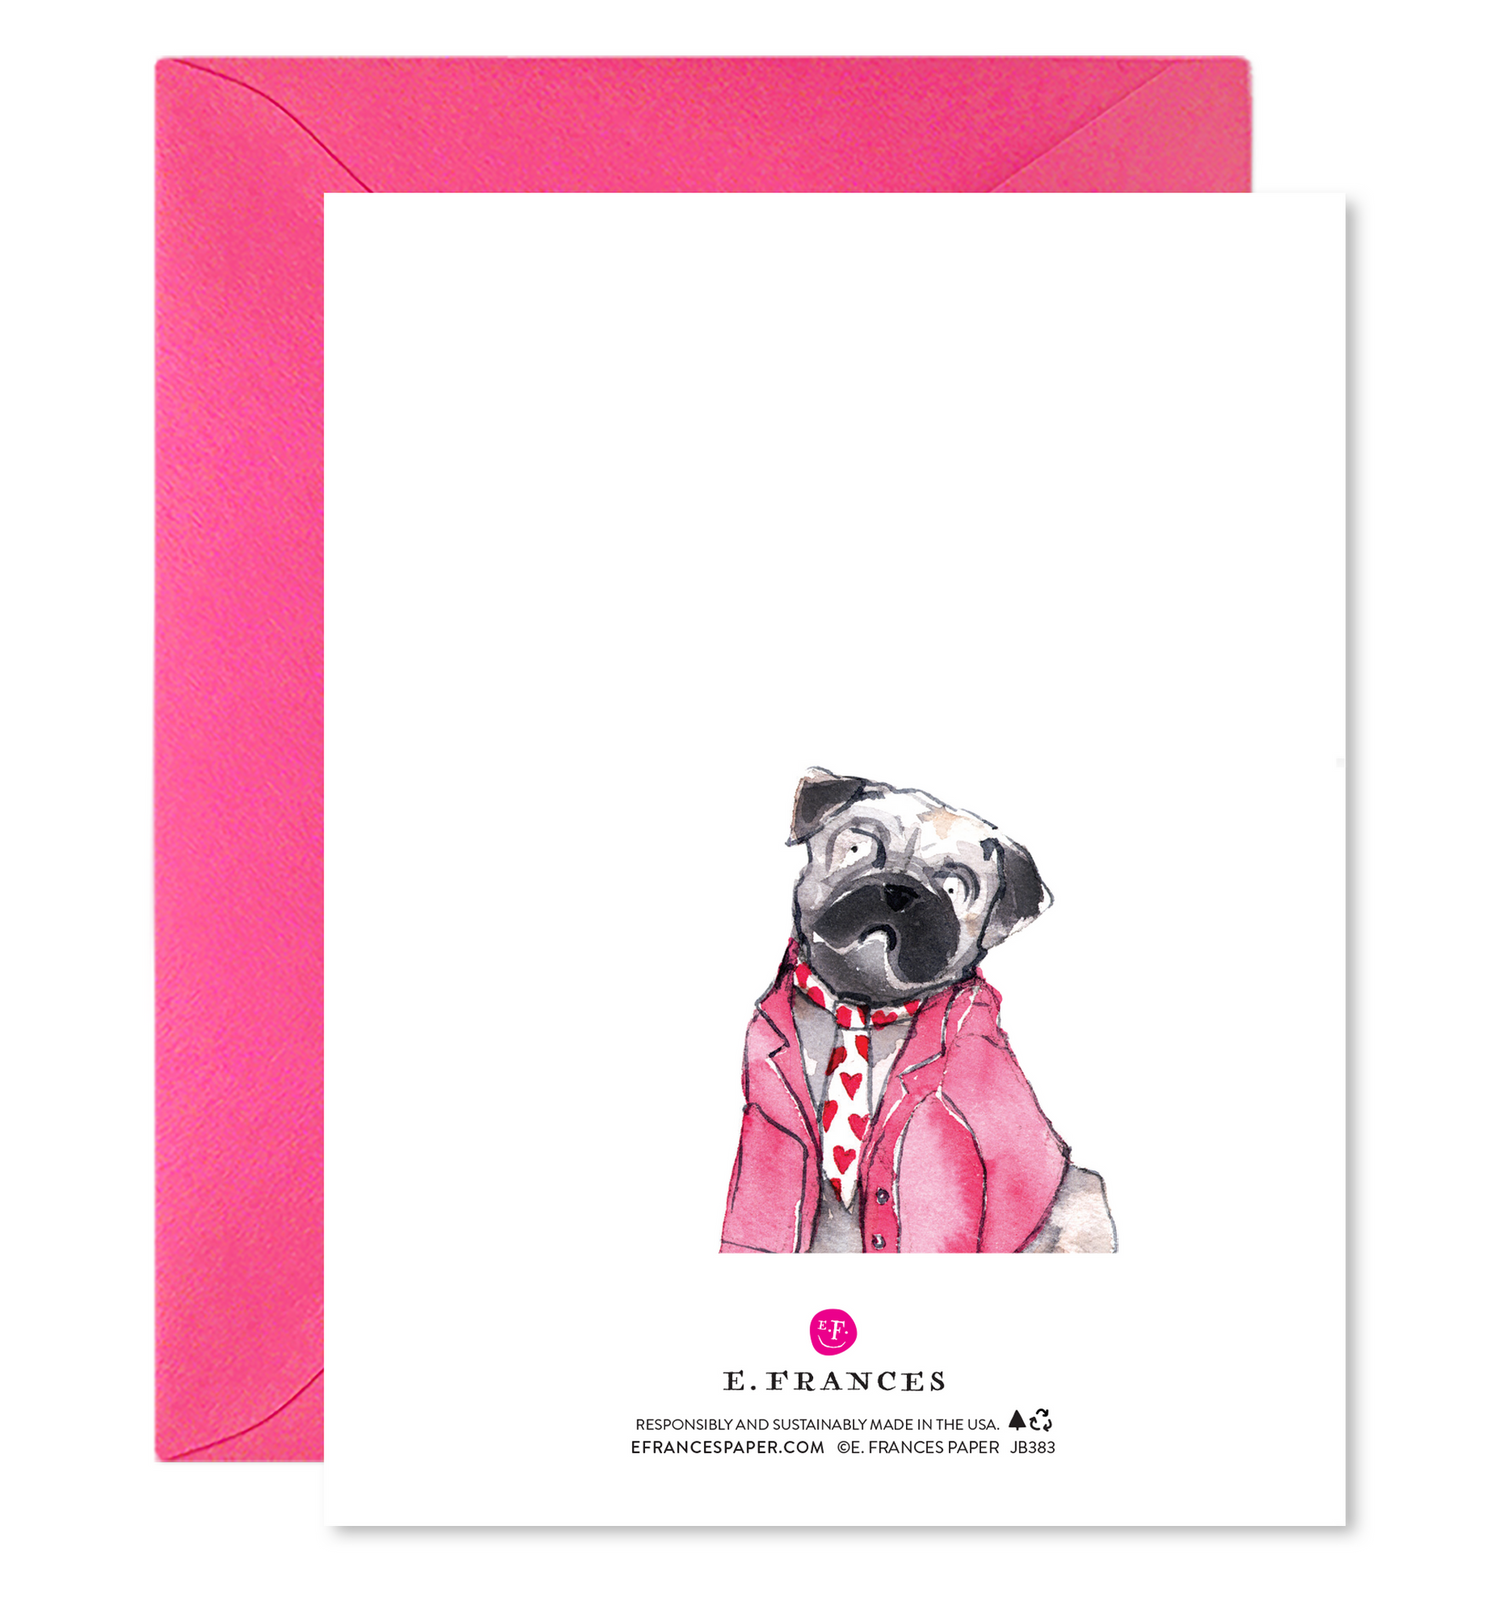 Valentine Doggies Greeting Card